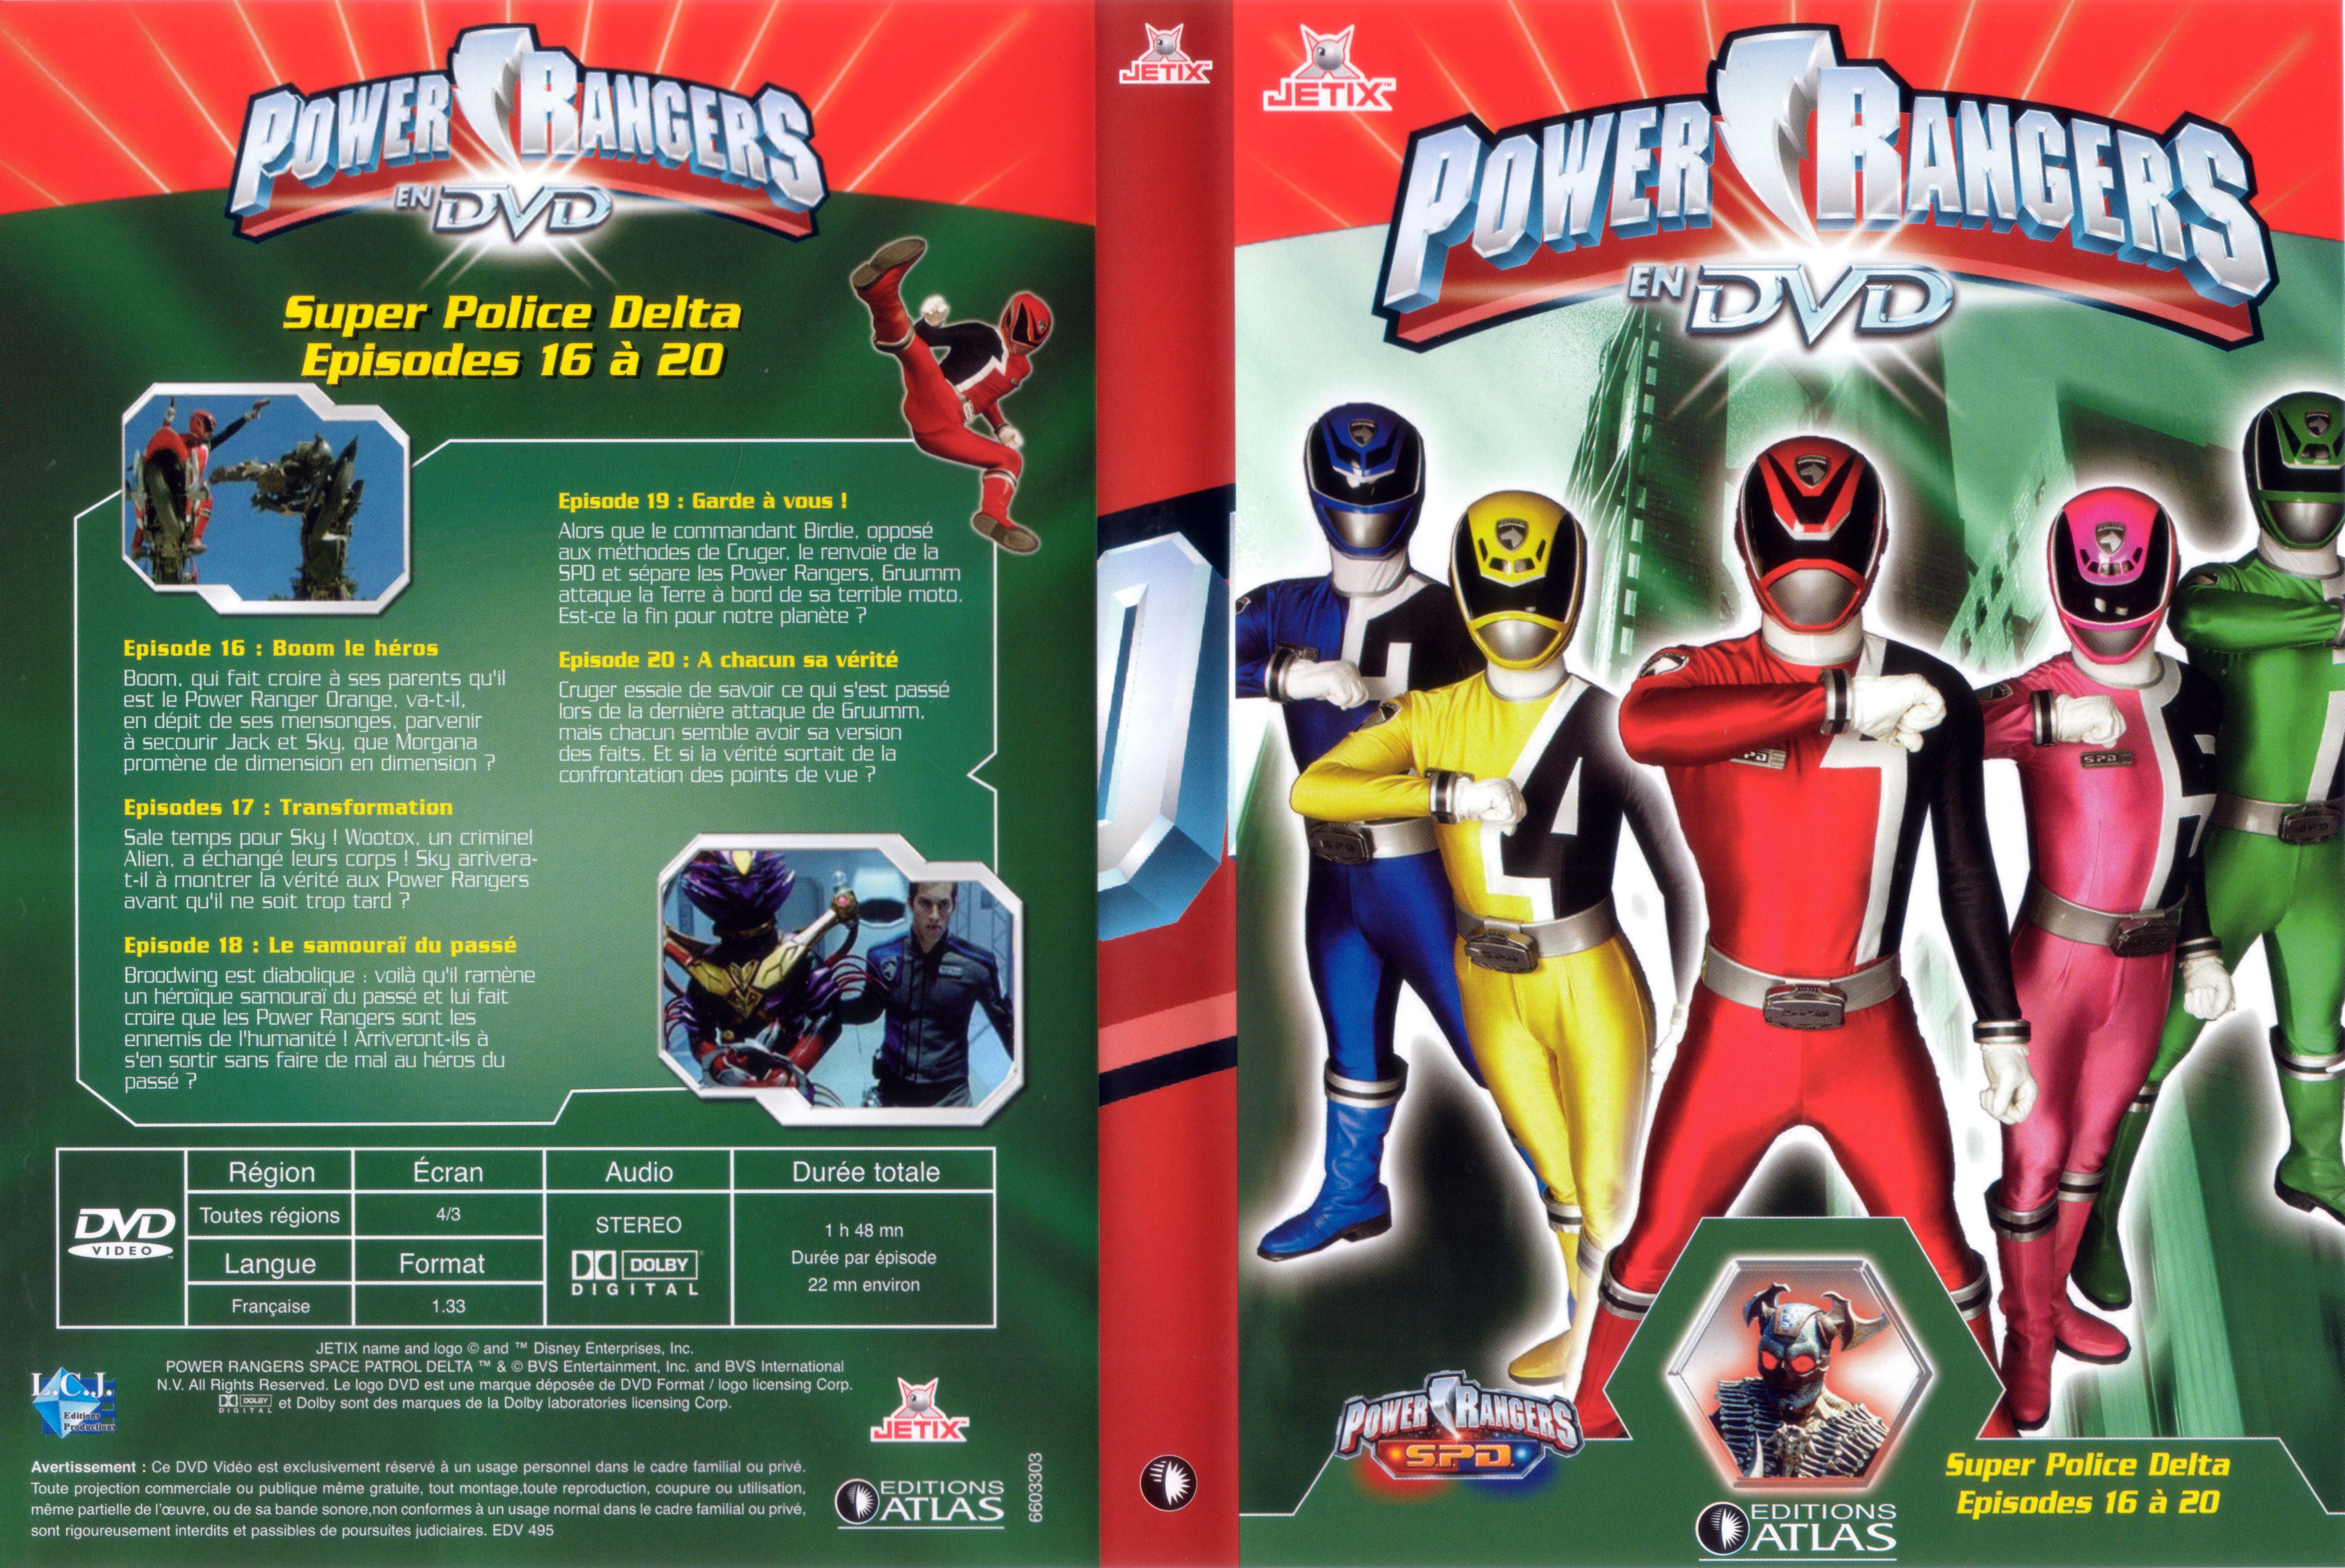 Jaquette DVD Power rangers DVD 4 (Ed Atlas)